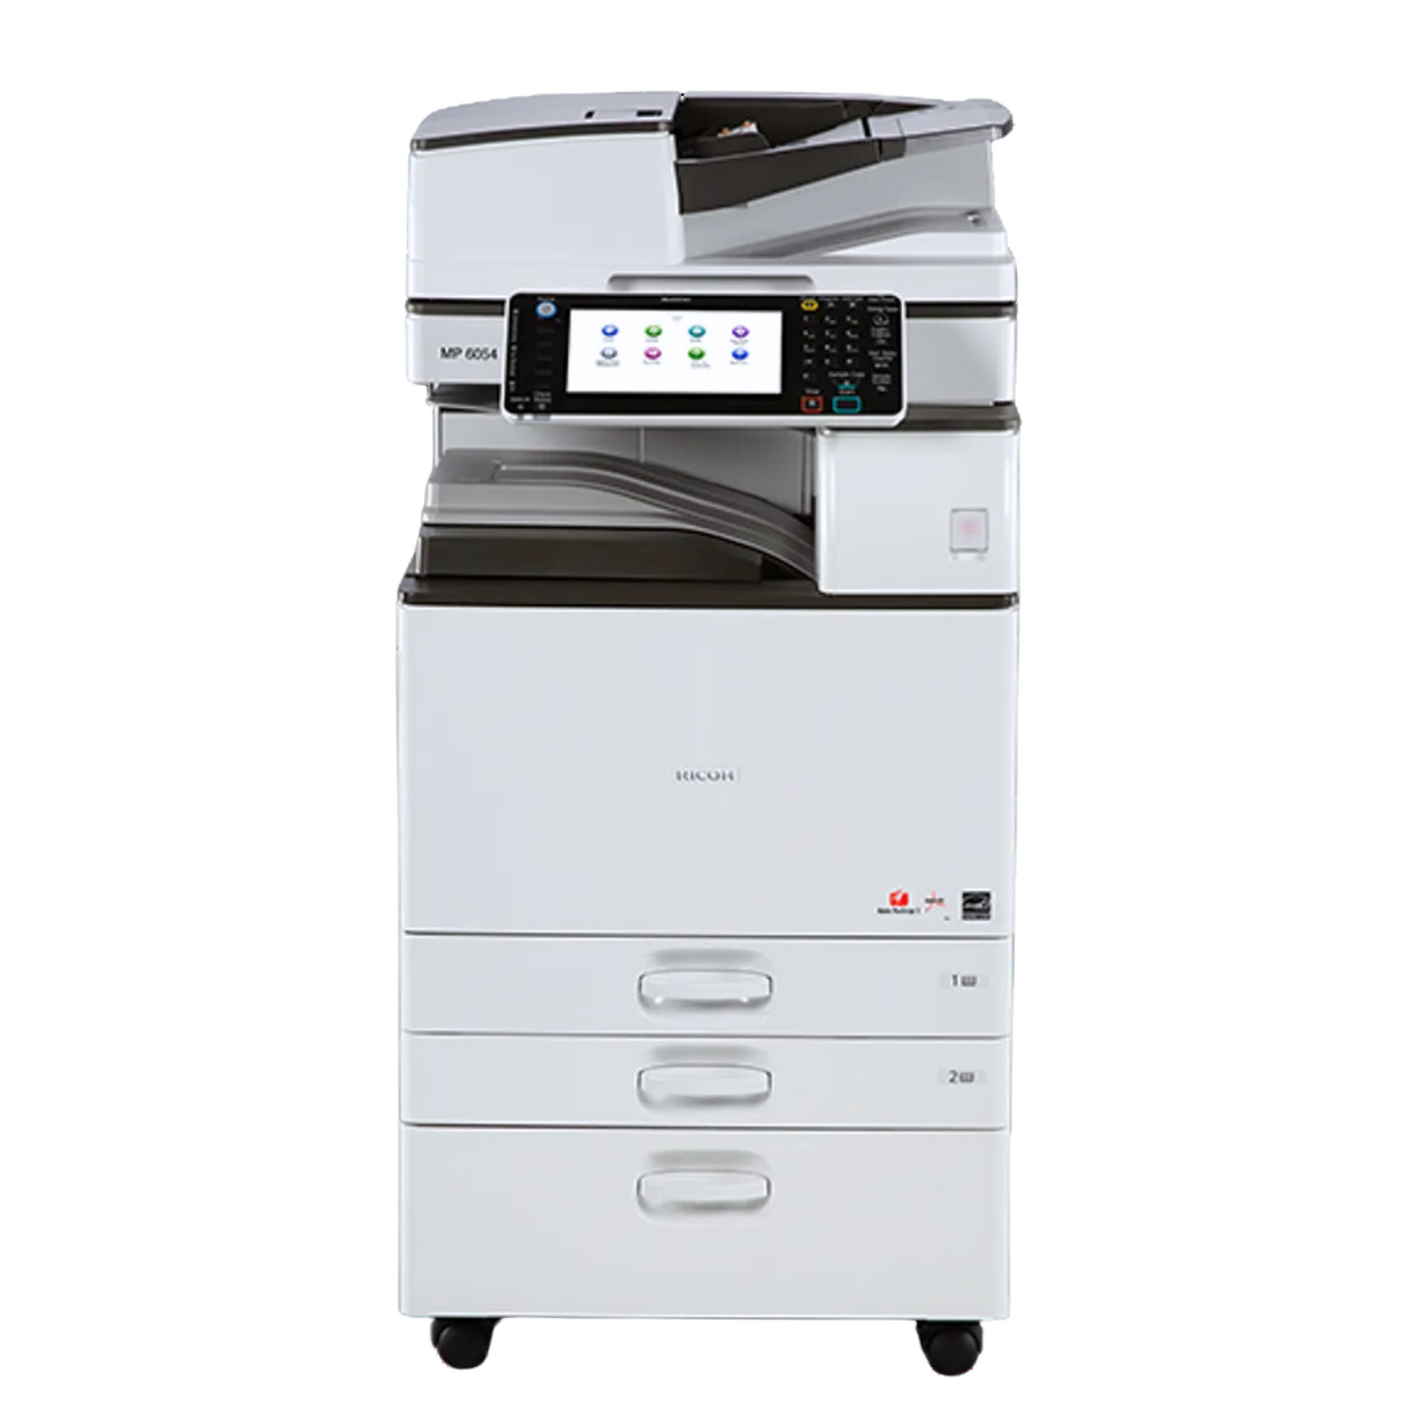 Impresora Multifuncional Ricoh MP 6054 Pasando copia